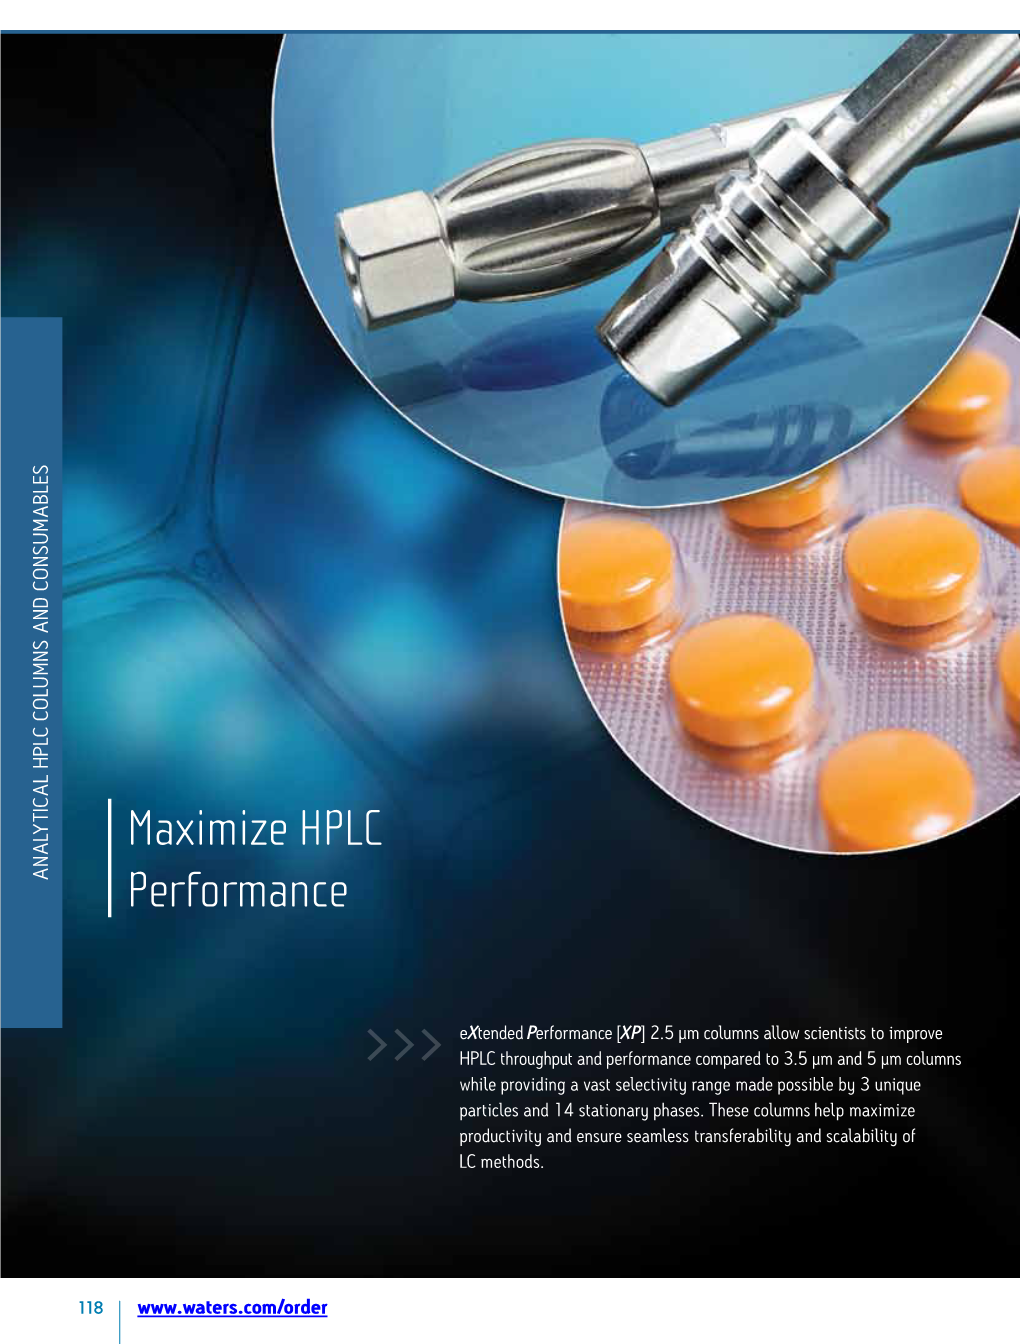 Maximize HPLC Performance